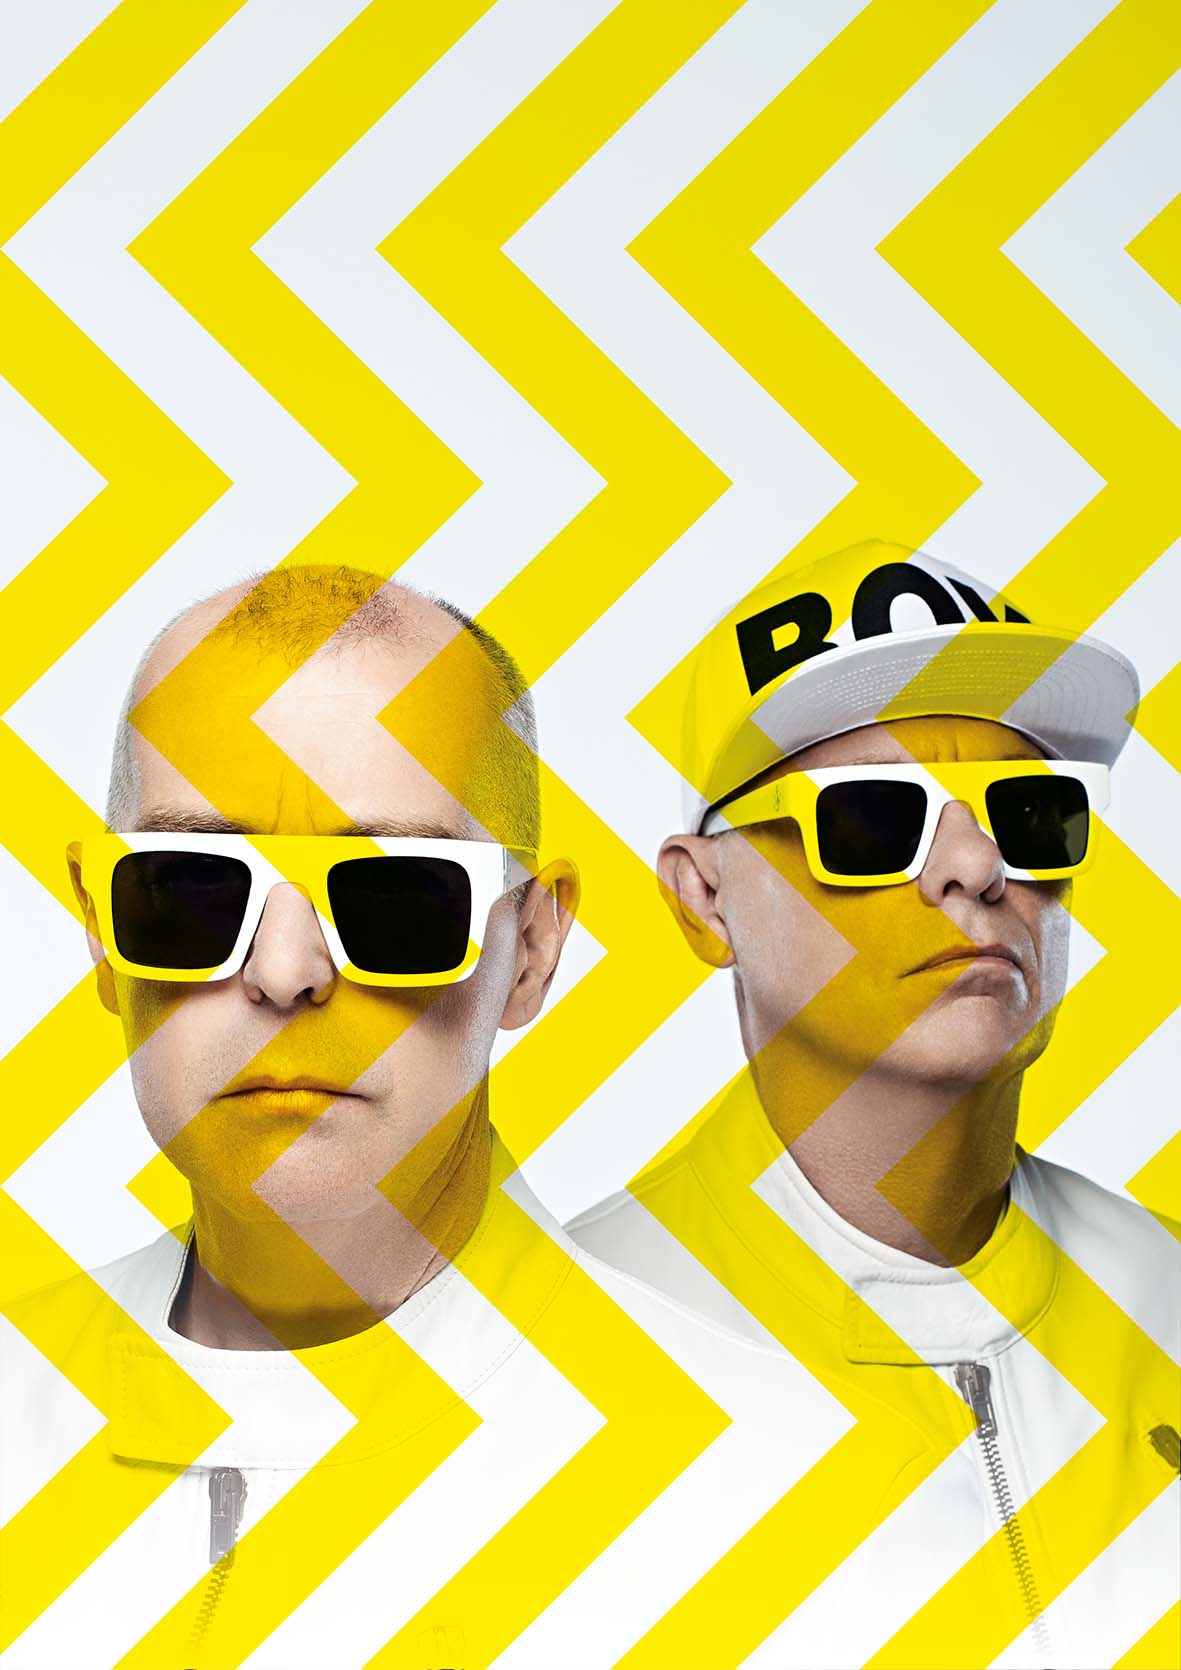 Pet Shop Boys to headline Bingley Music Live 2014